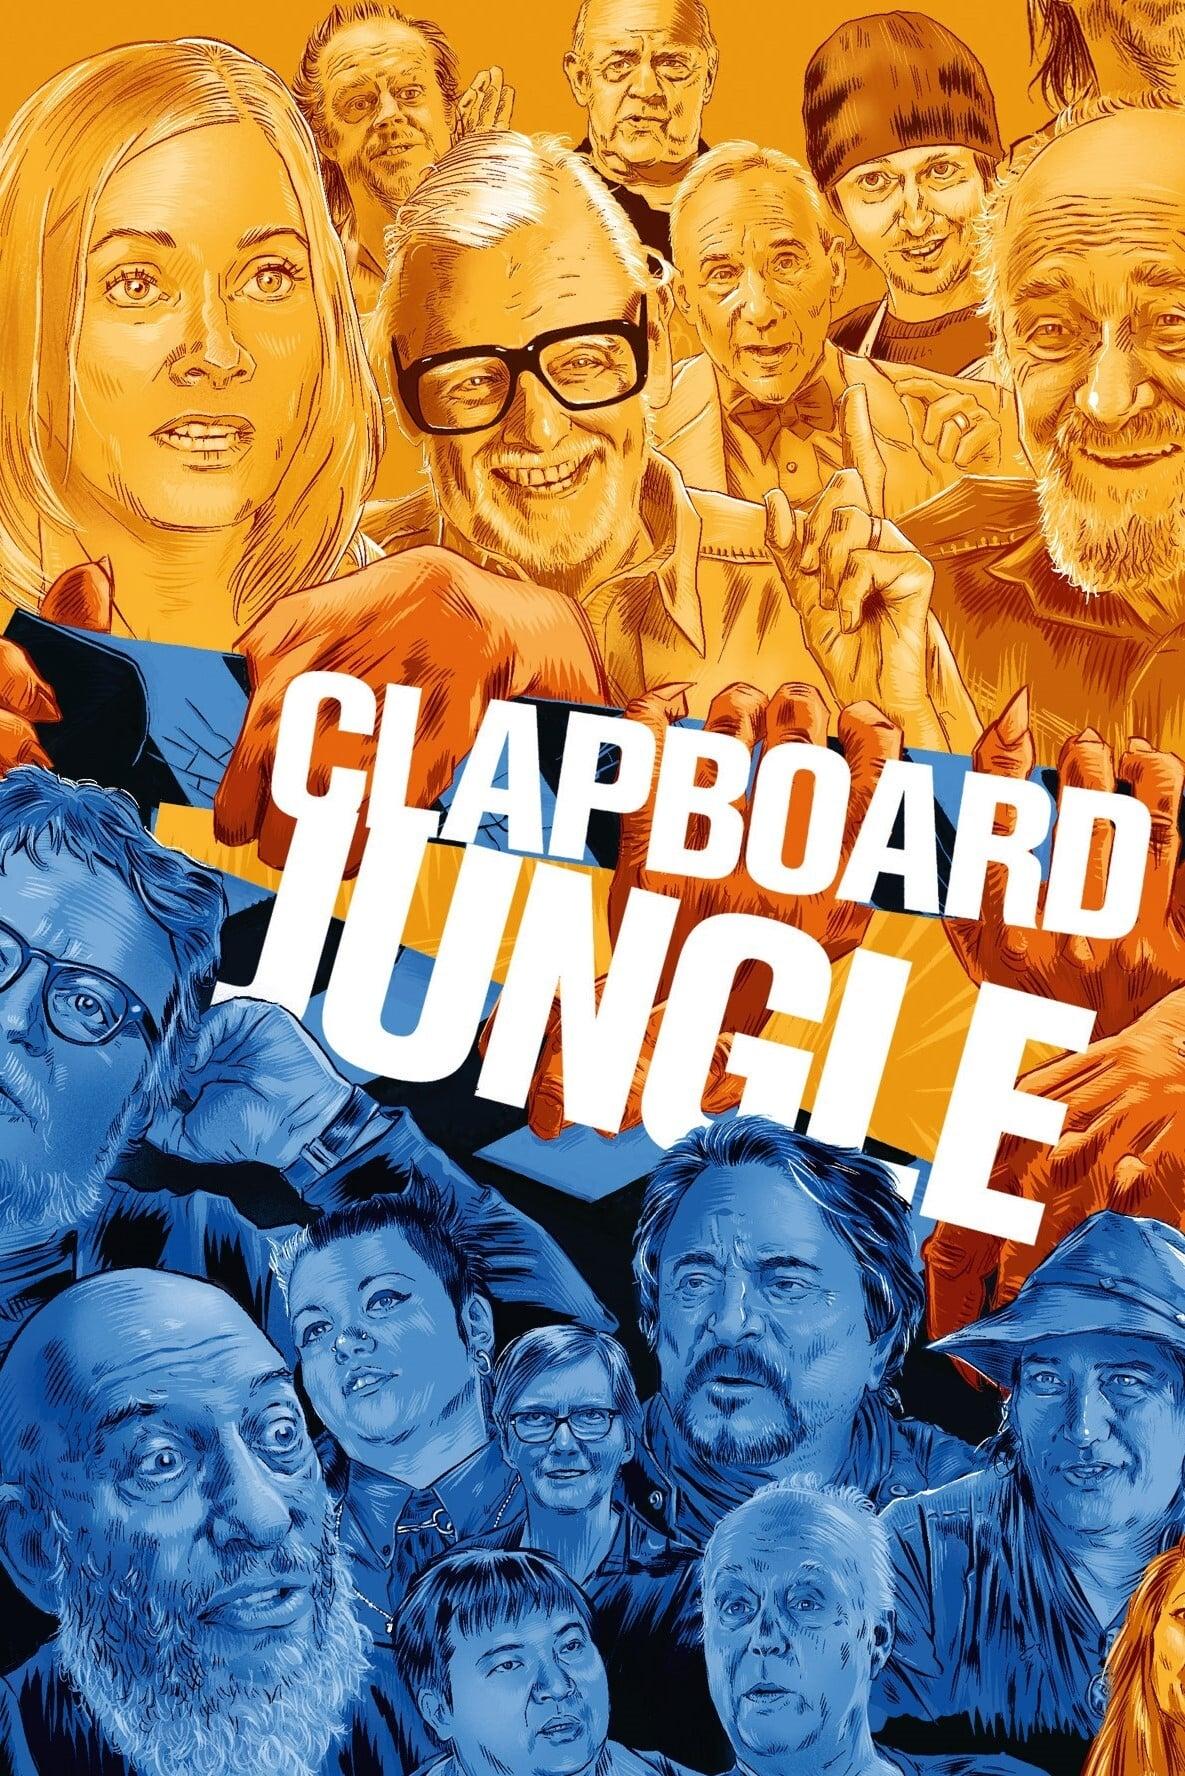 Clapboard Jungle poster